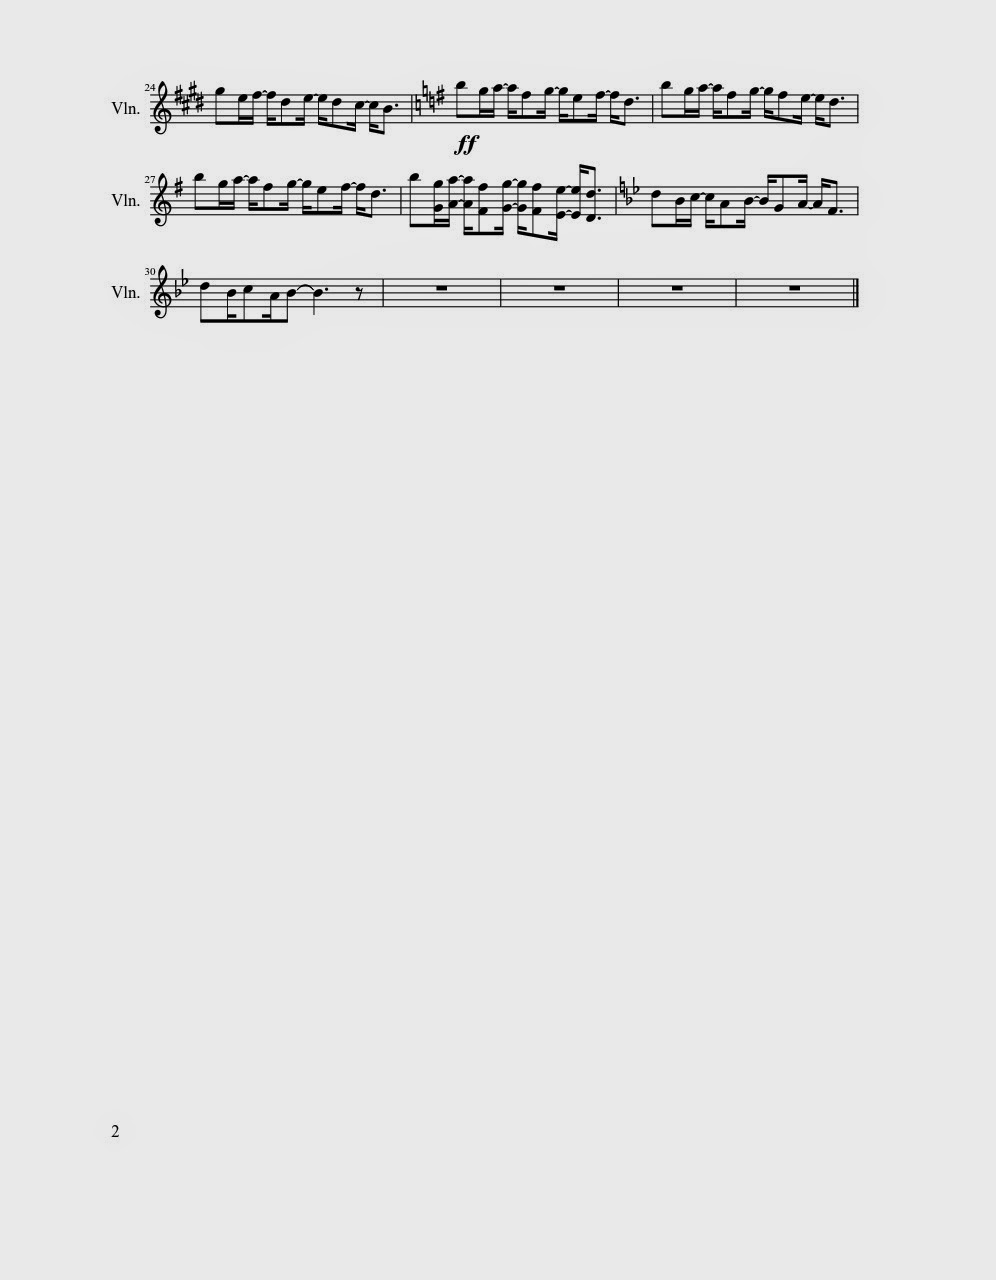 Guren no yumiya violin sheet music